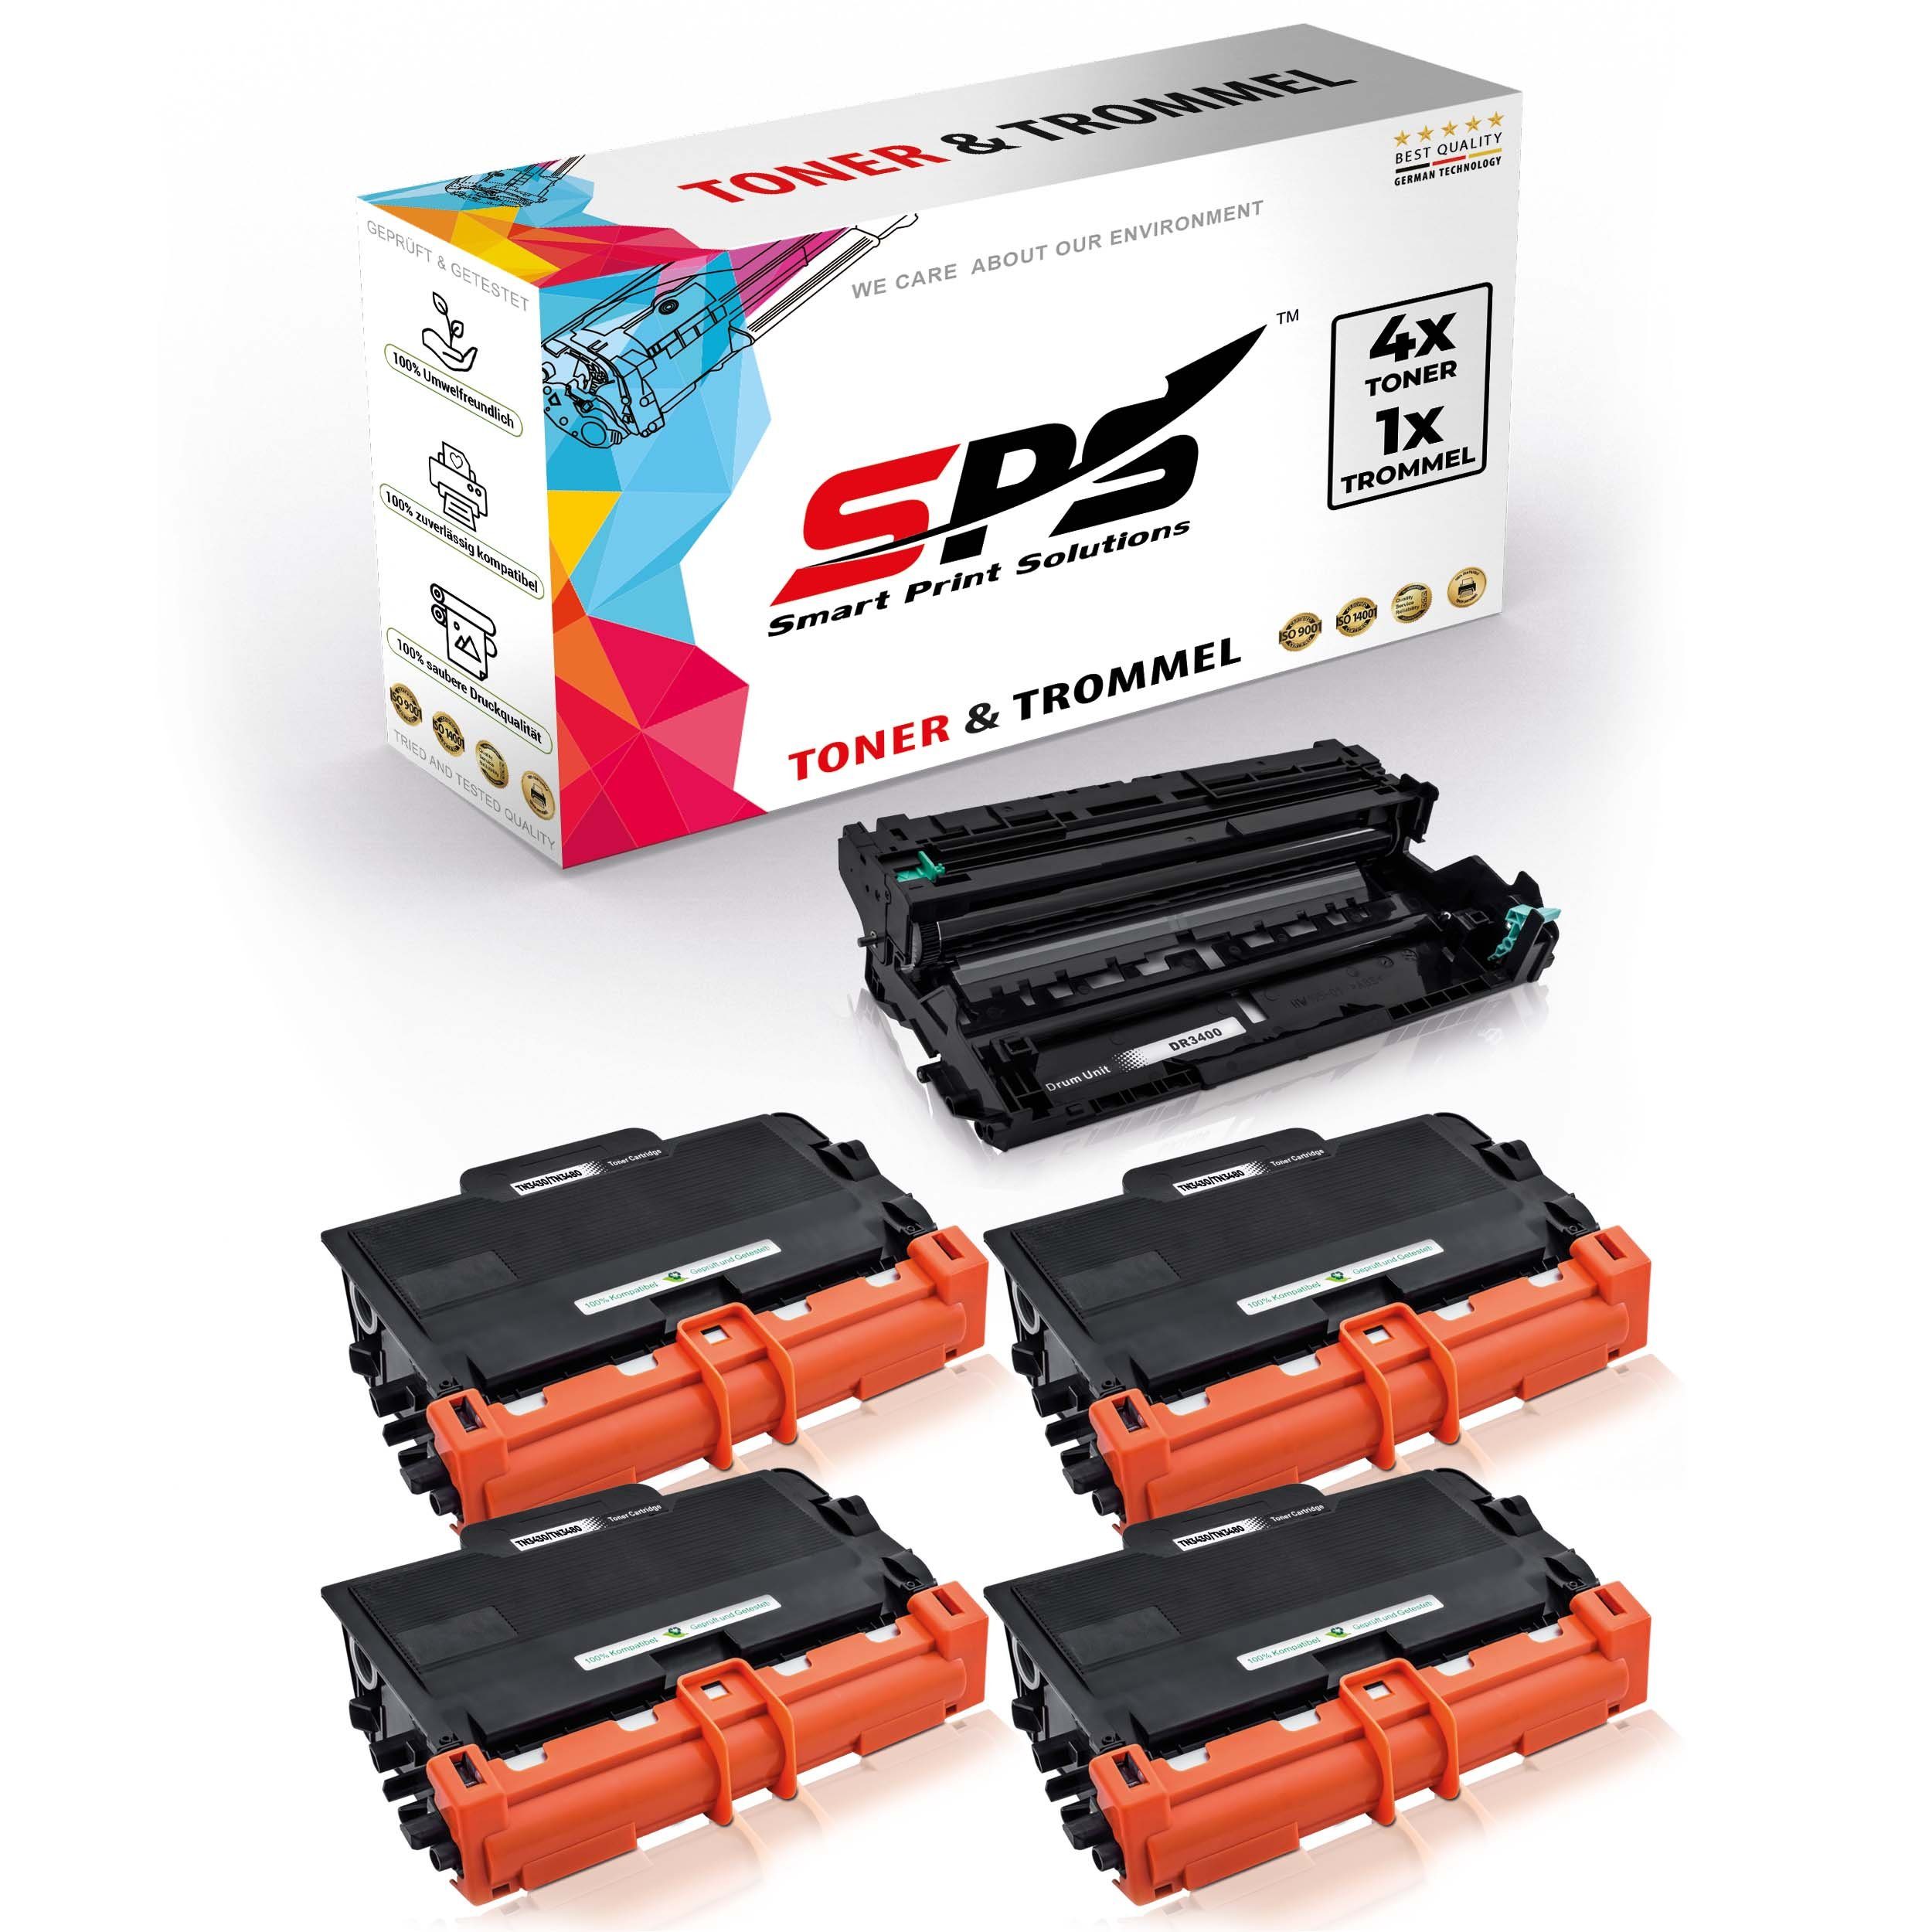 SPS Tonerkartusche Kompatibel für Brother HL-L5200 DR-3400 TN-3430, (5er Pack) | Tonerpatronen